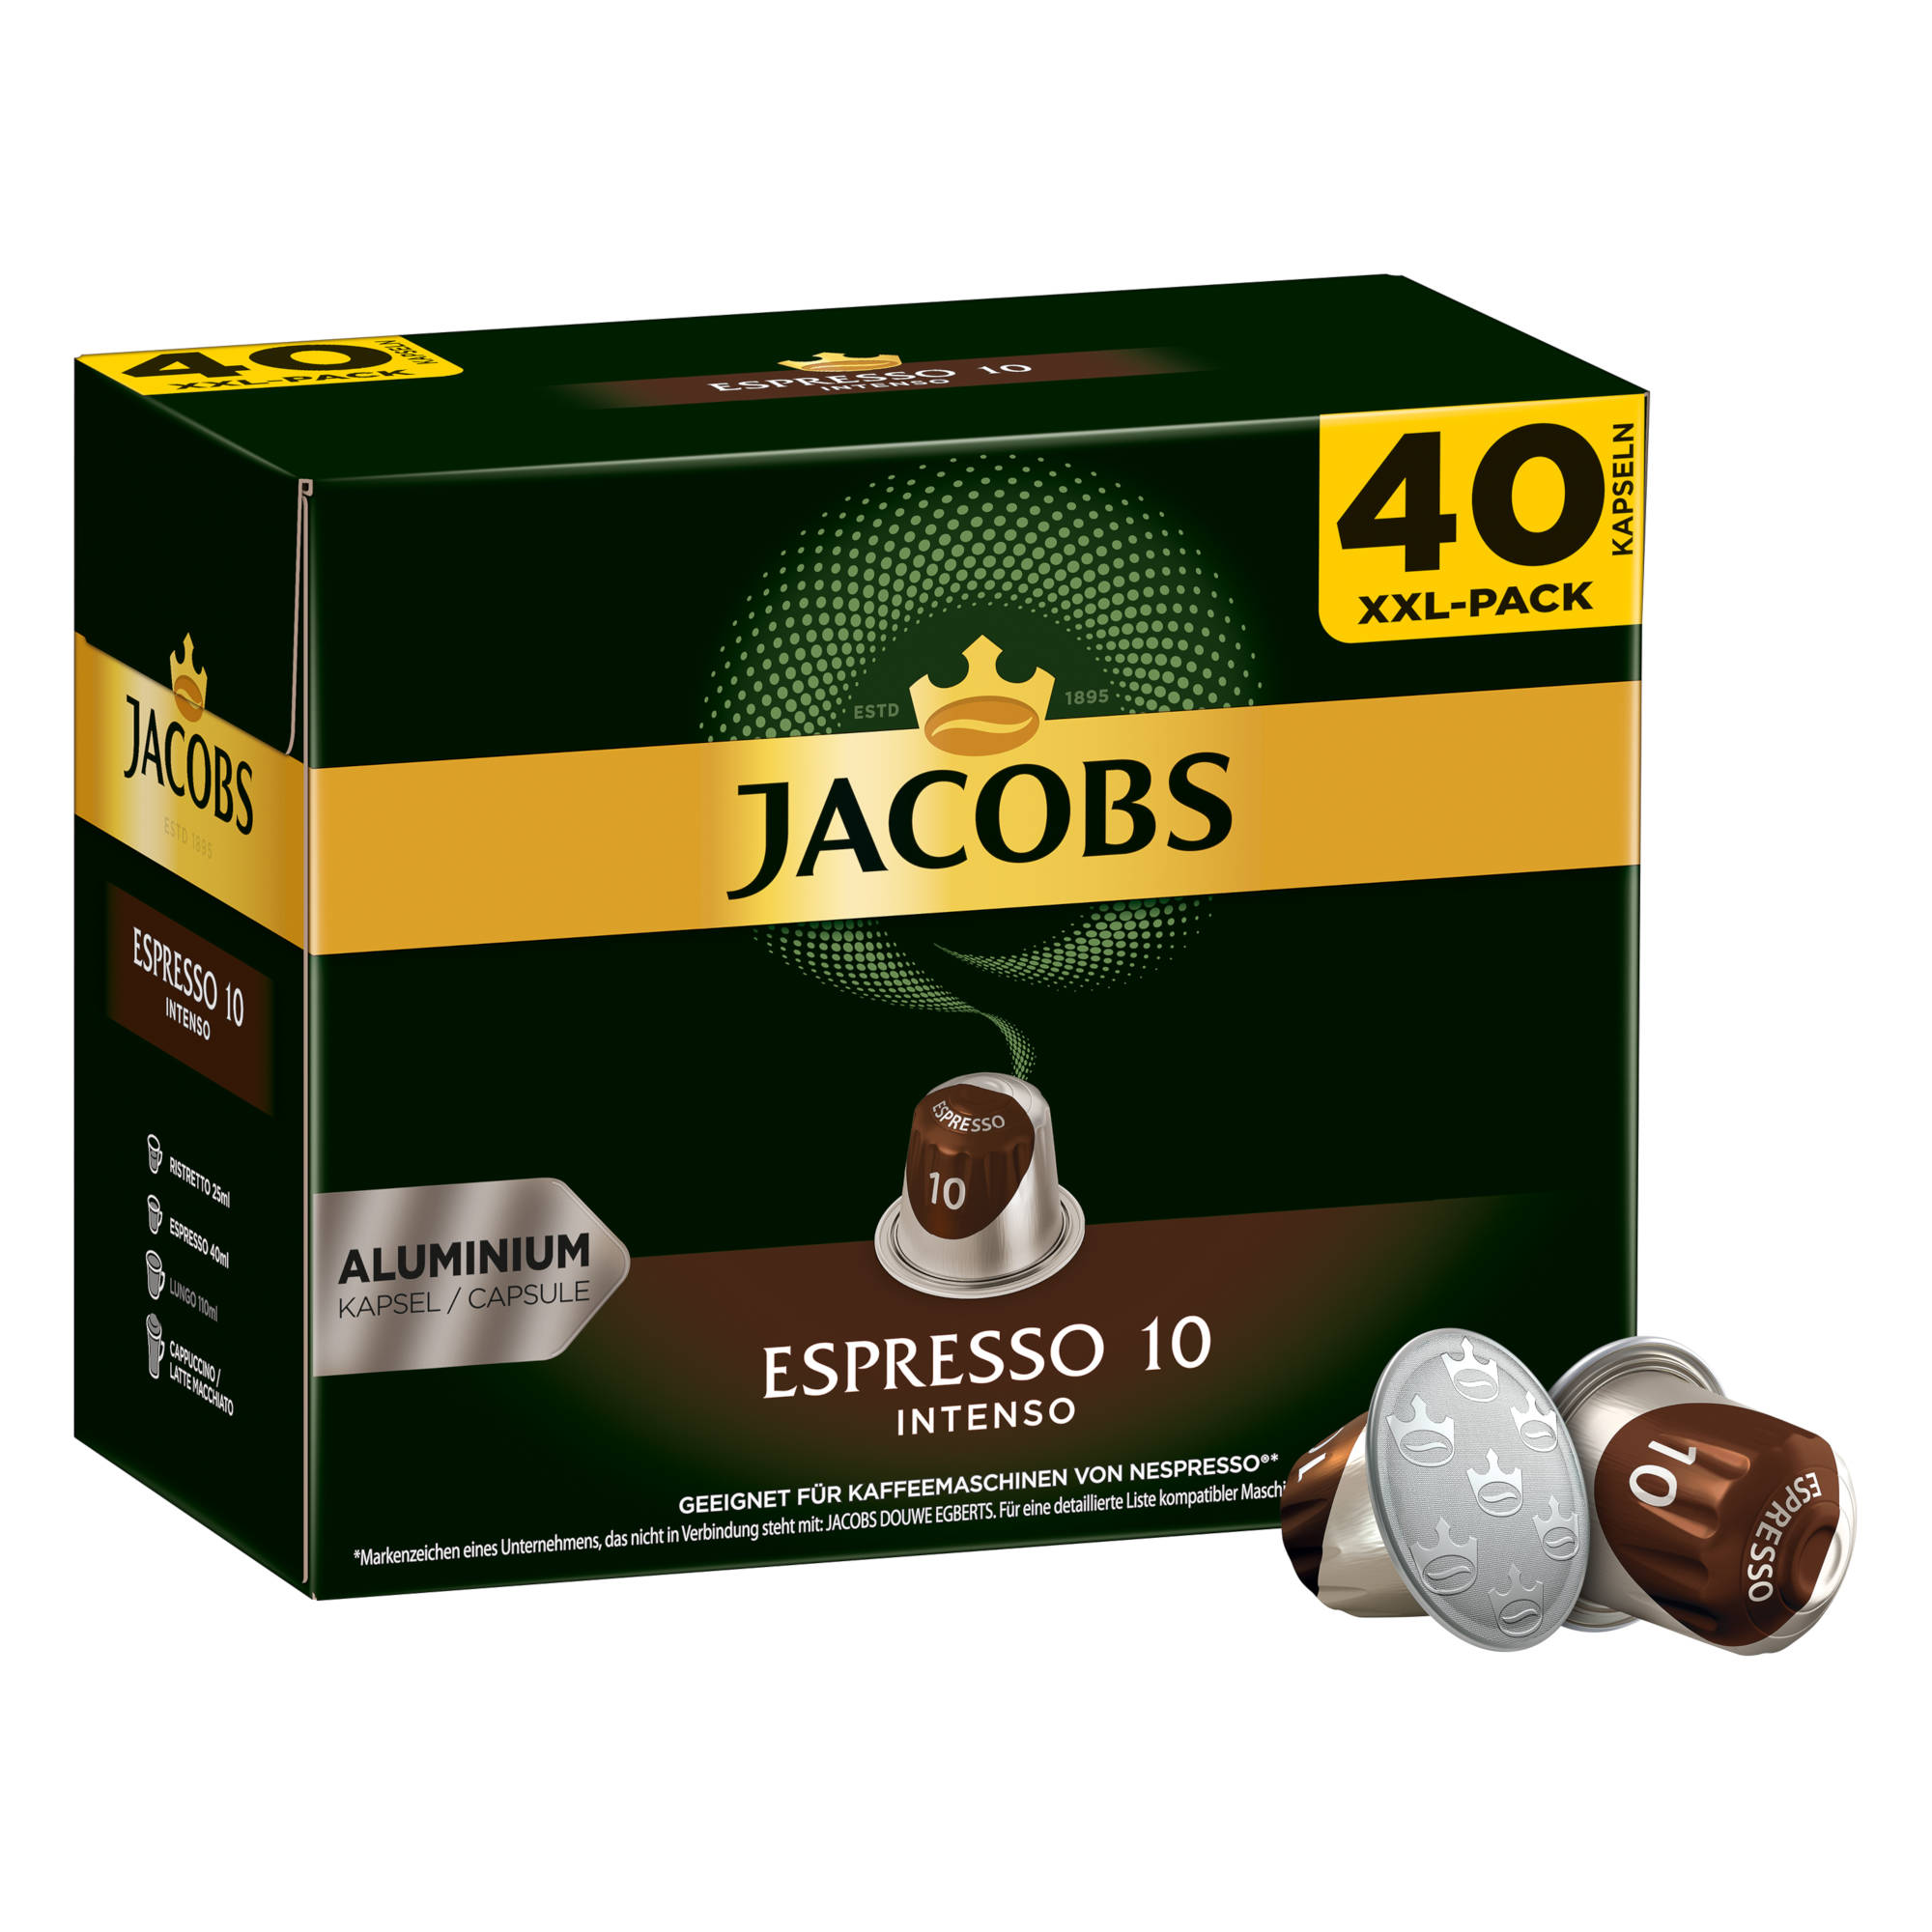 kompatibel Lungo (Nespresso System) Kaffeekapseln JACOBS + Espresso 240 6 10 Nespresso®*